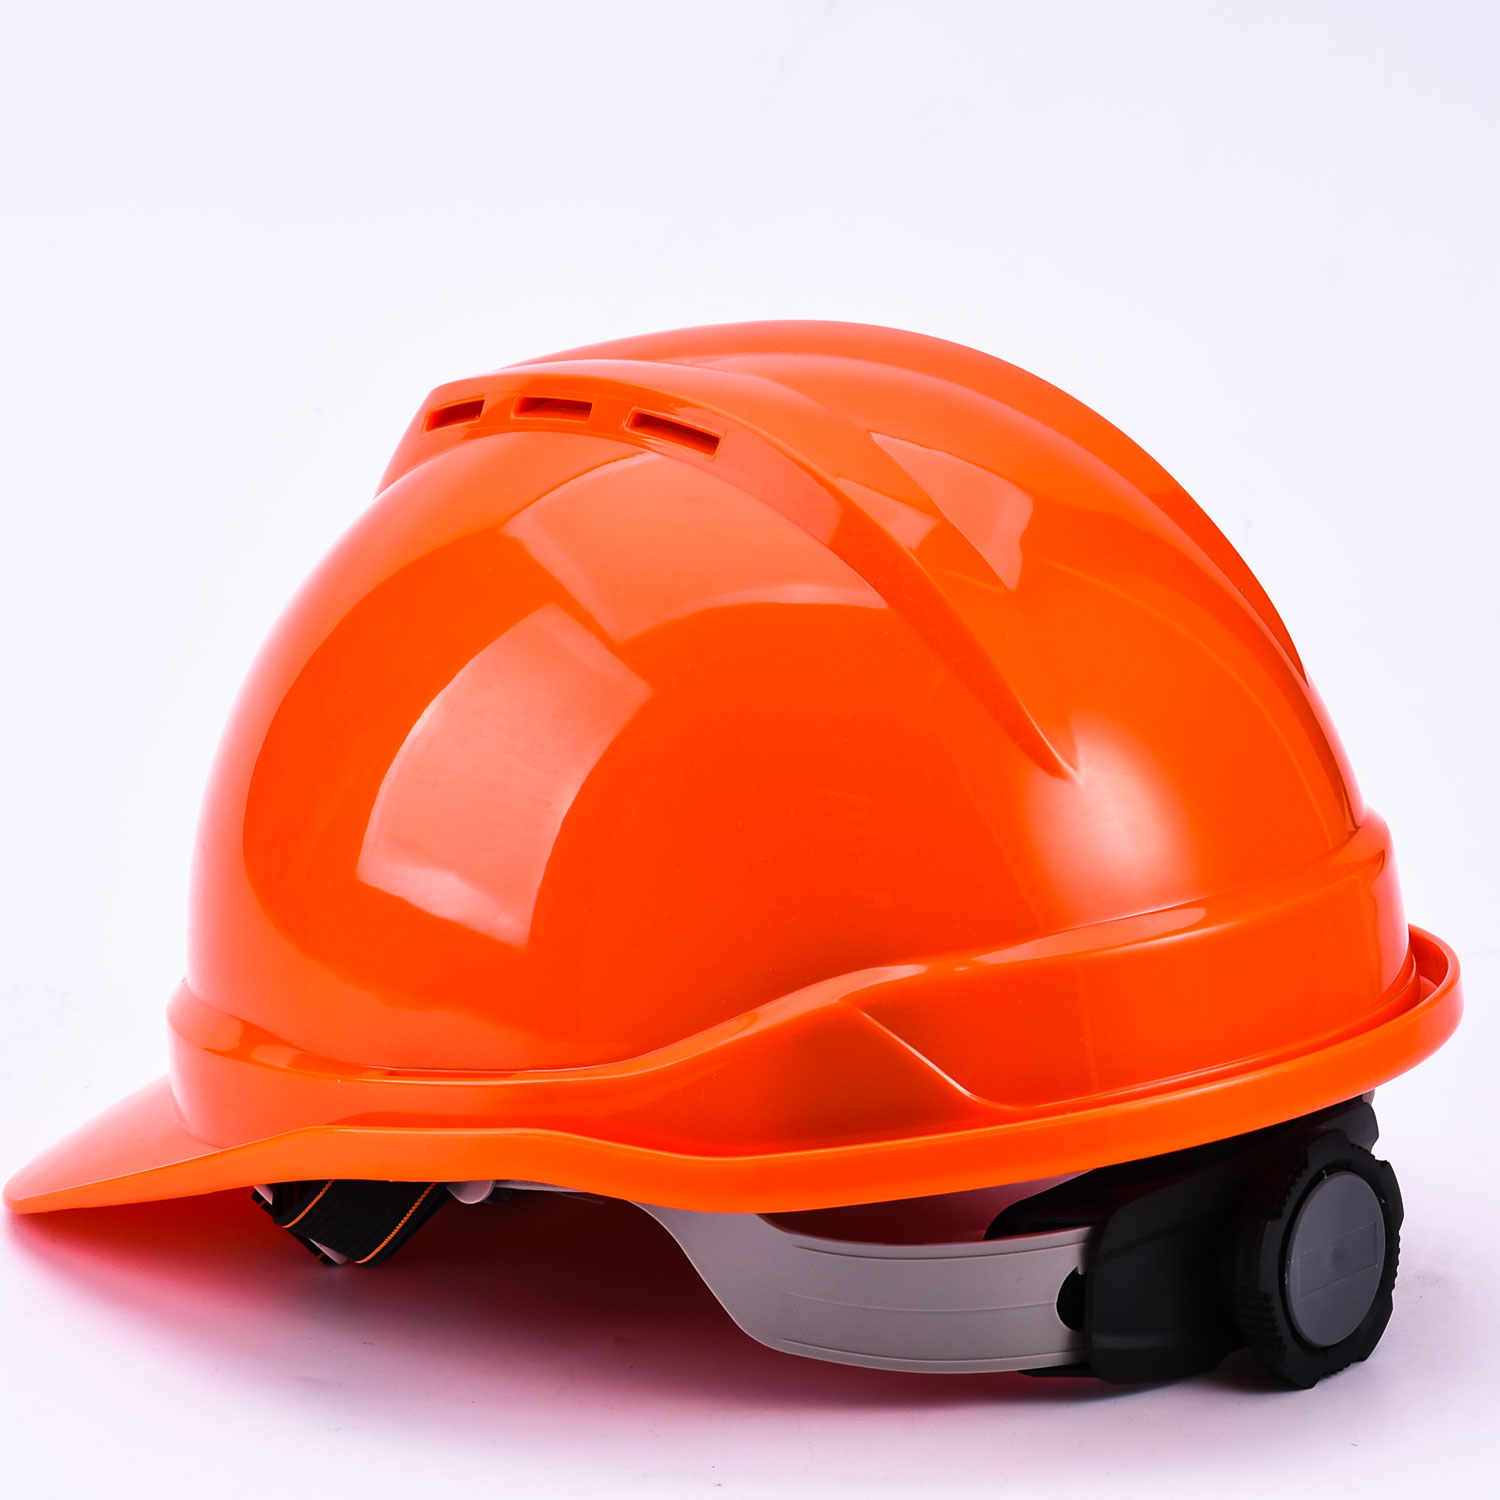 Blue Protective Work Helmet W-002 